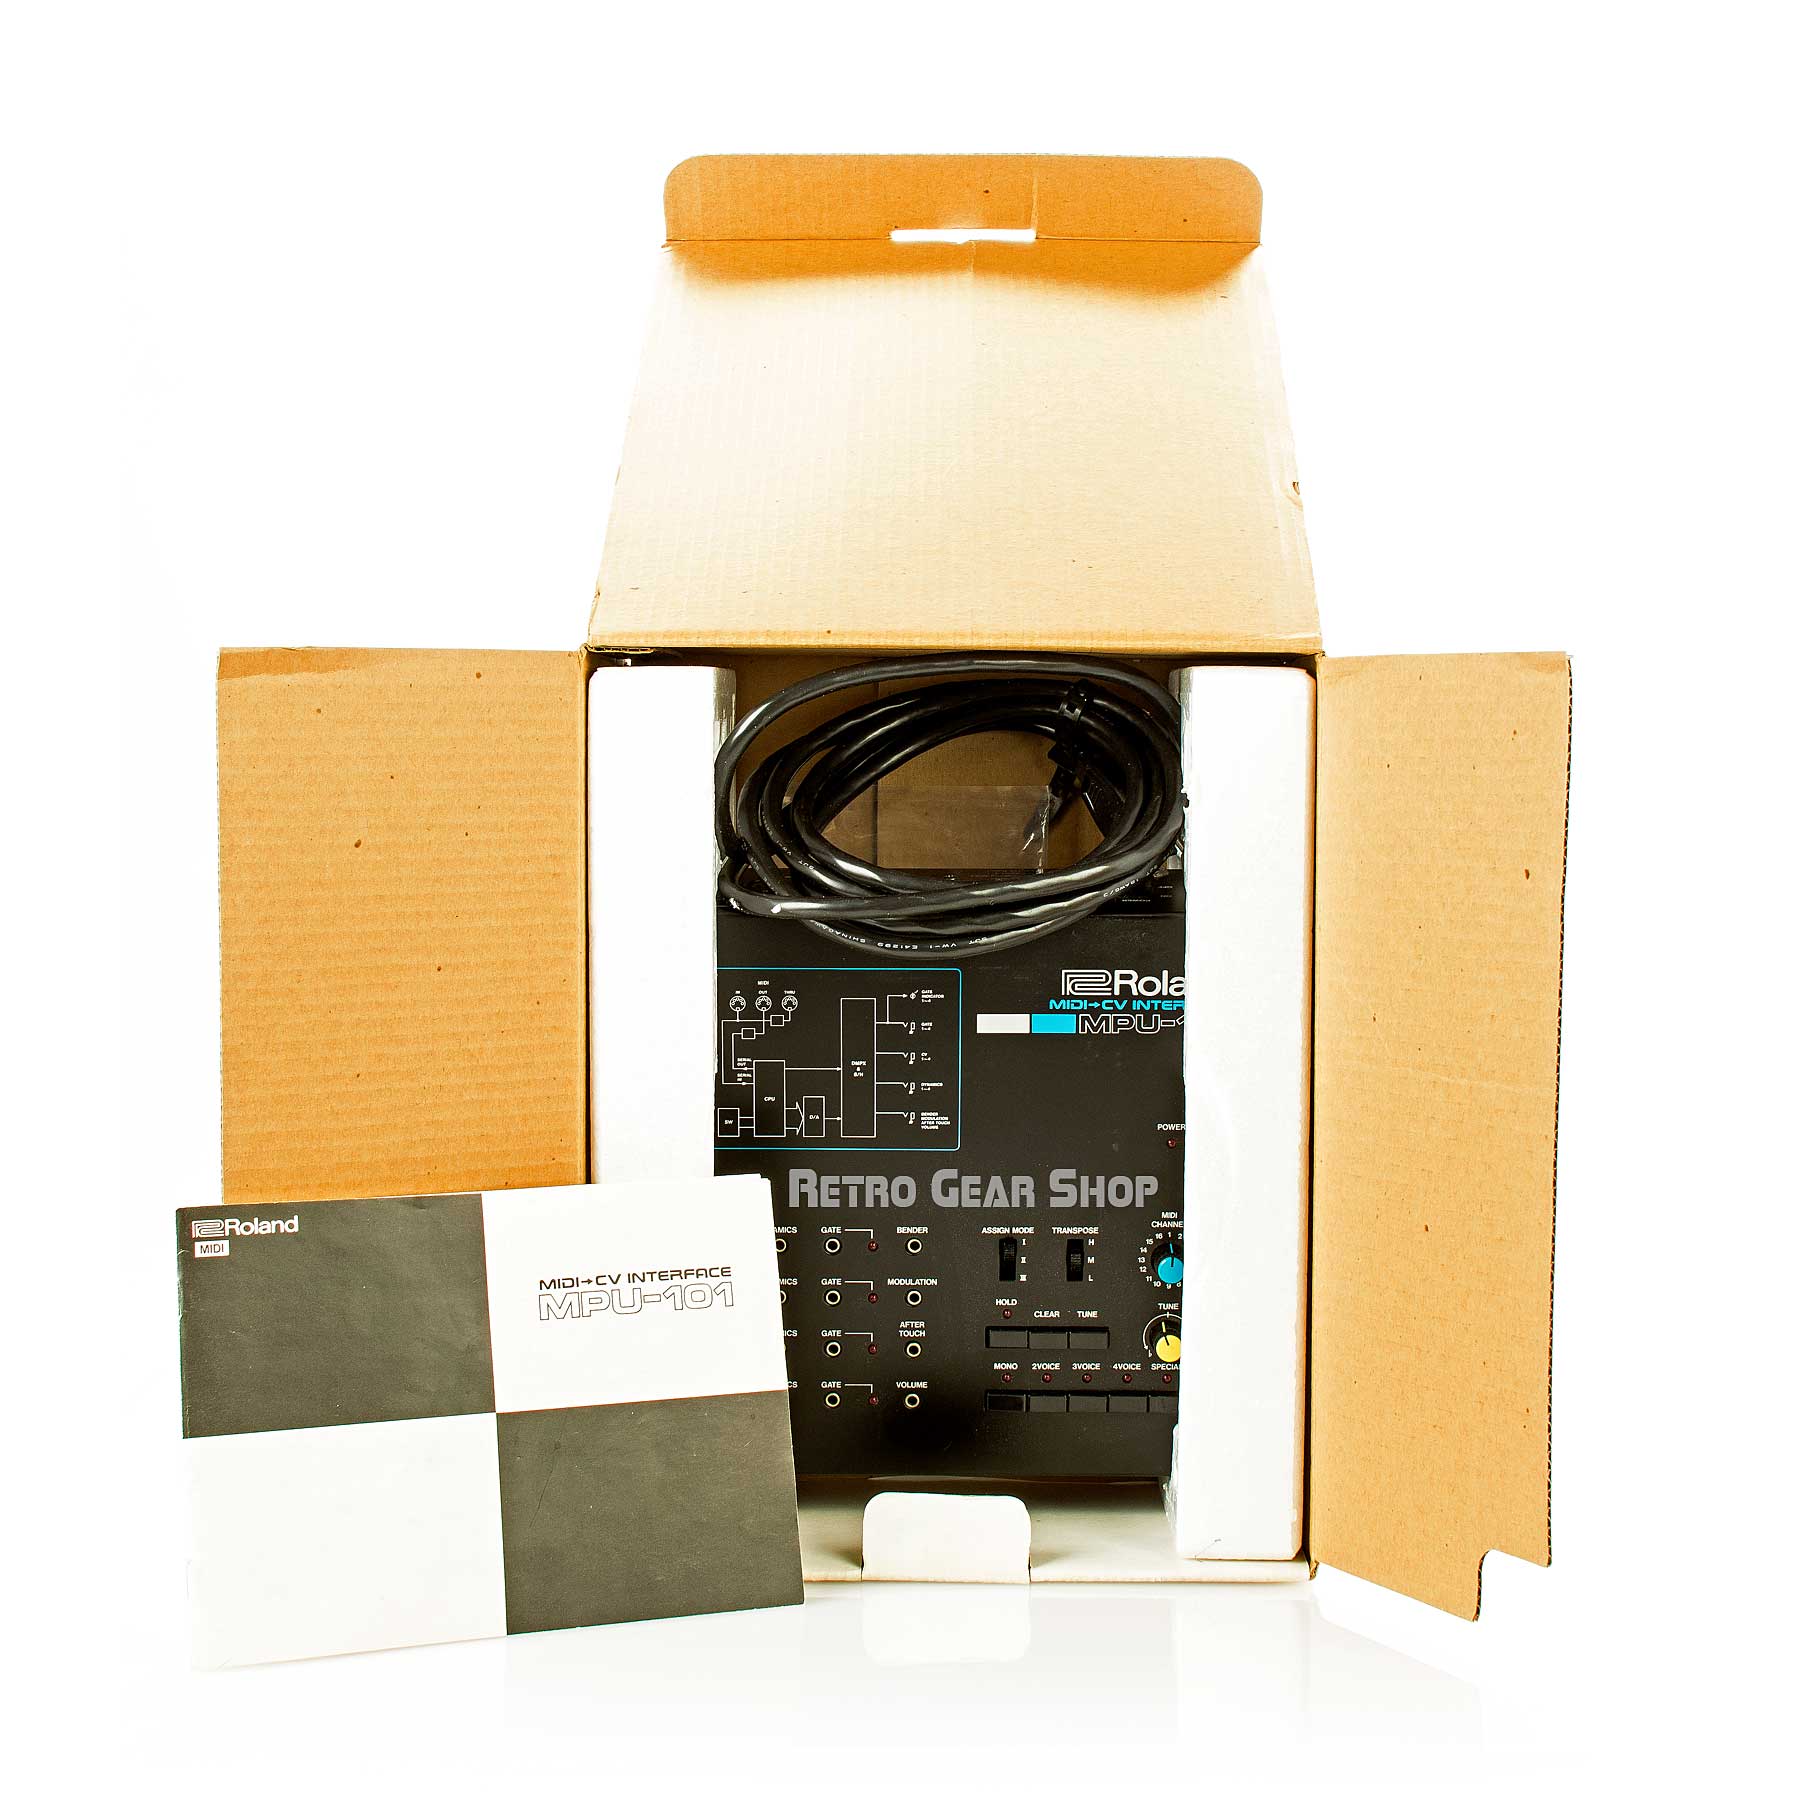 Roland MPU-101 Midi-CV Interface Box Packaging Manual